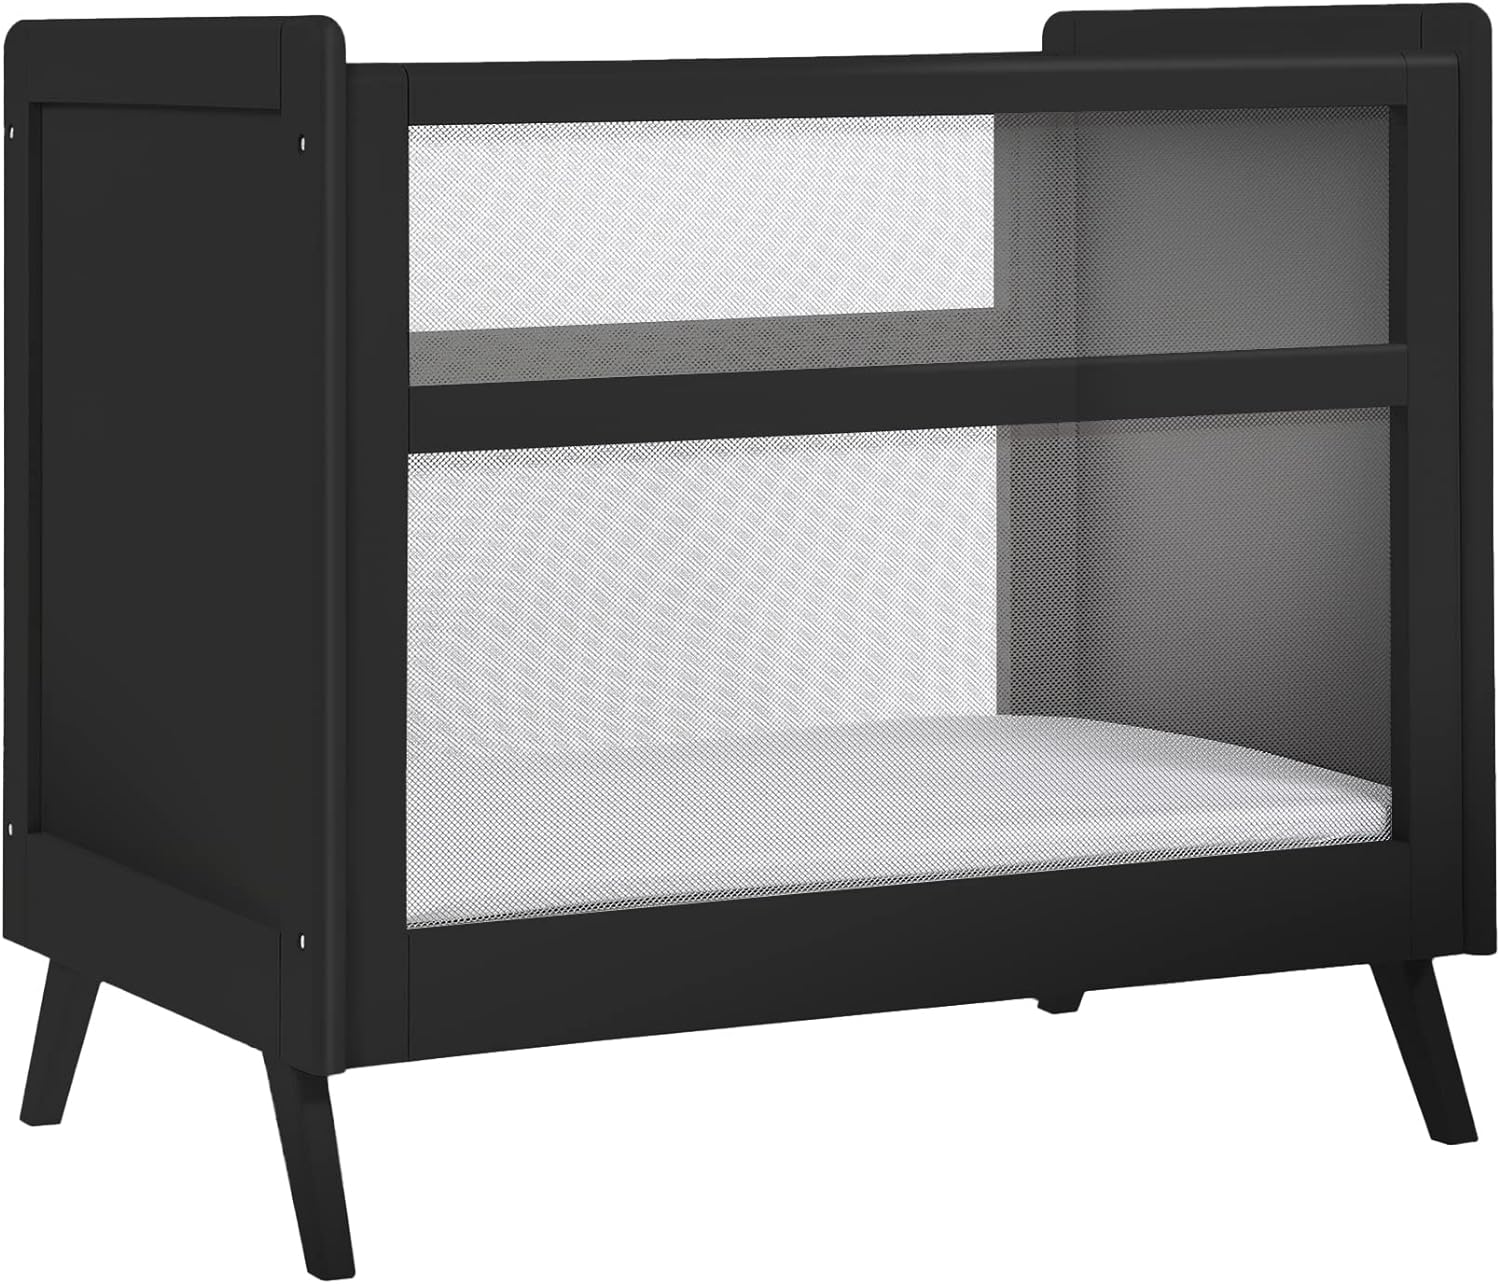 BreathableBaby Breathable Mesh 2-in-1 Mini Crib, Black - $180